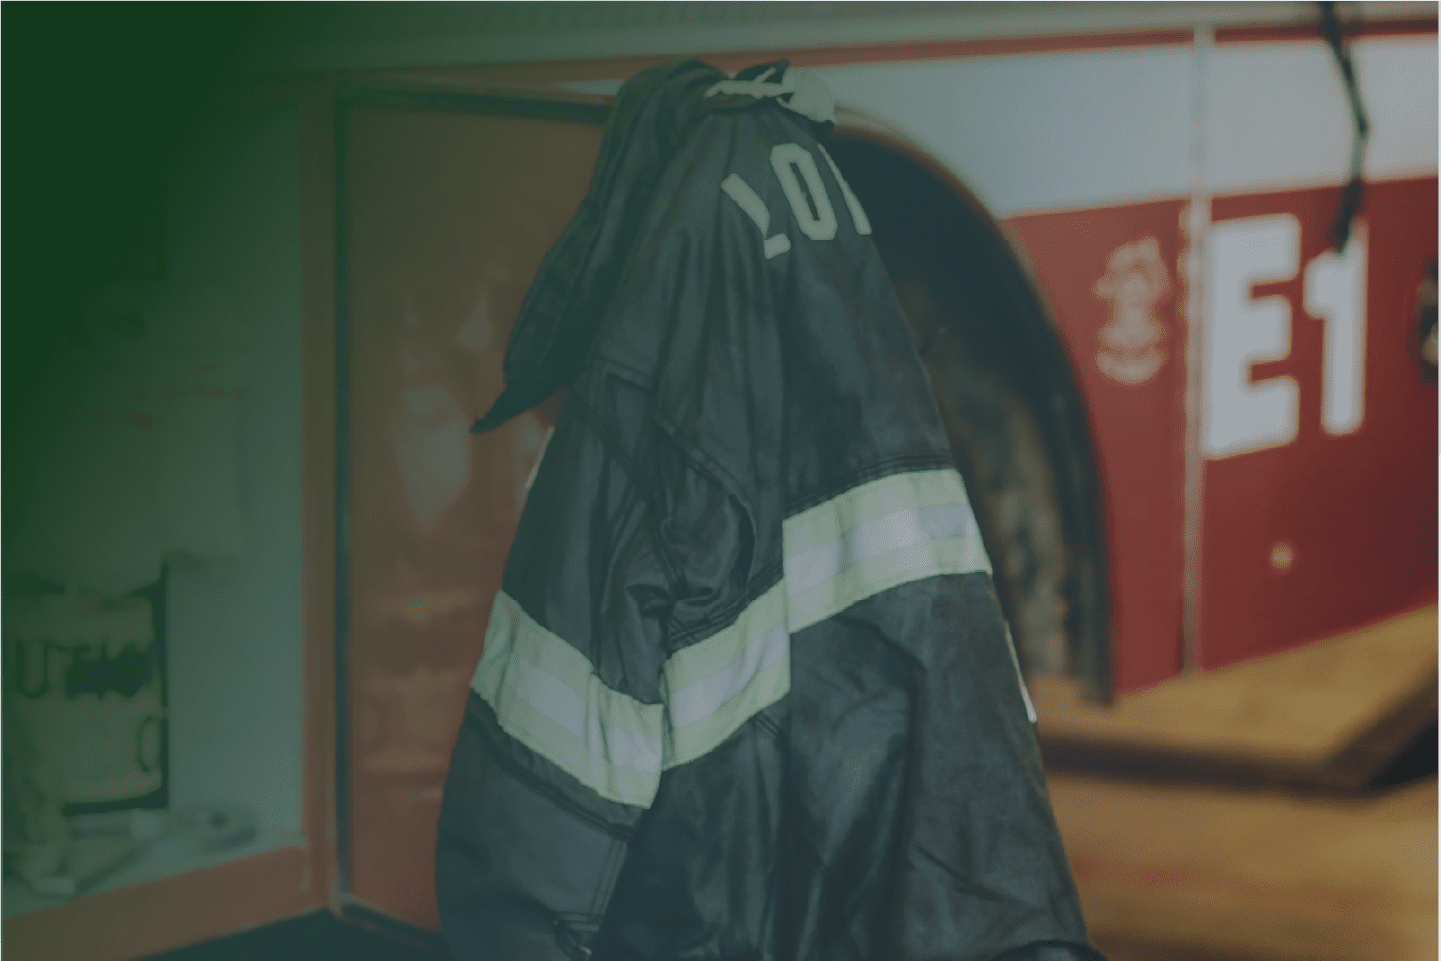 John's firefighter jacket hangs from a fire truck.